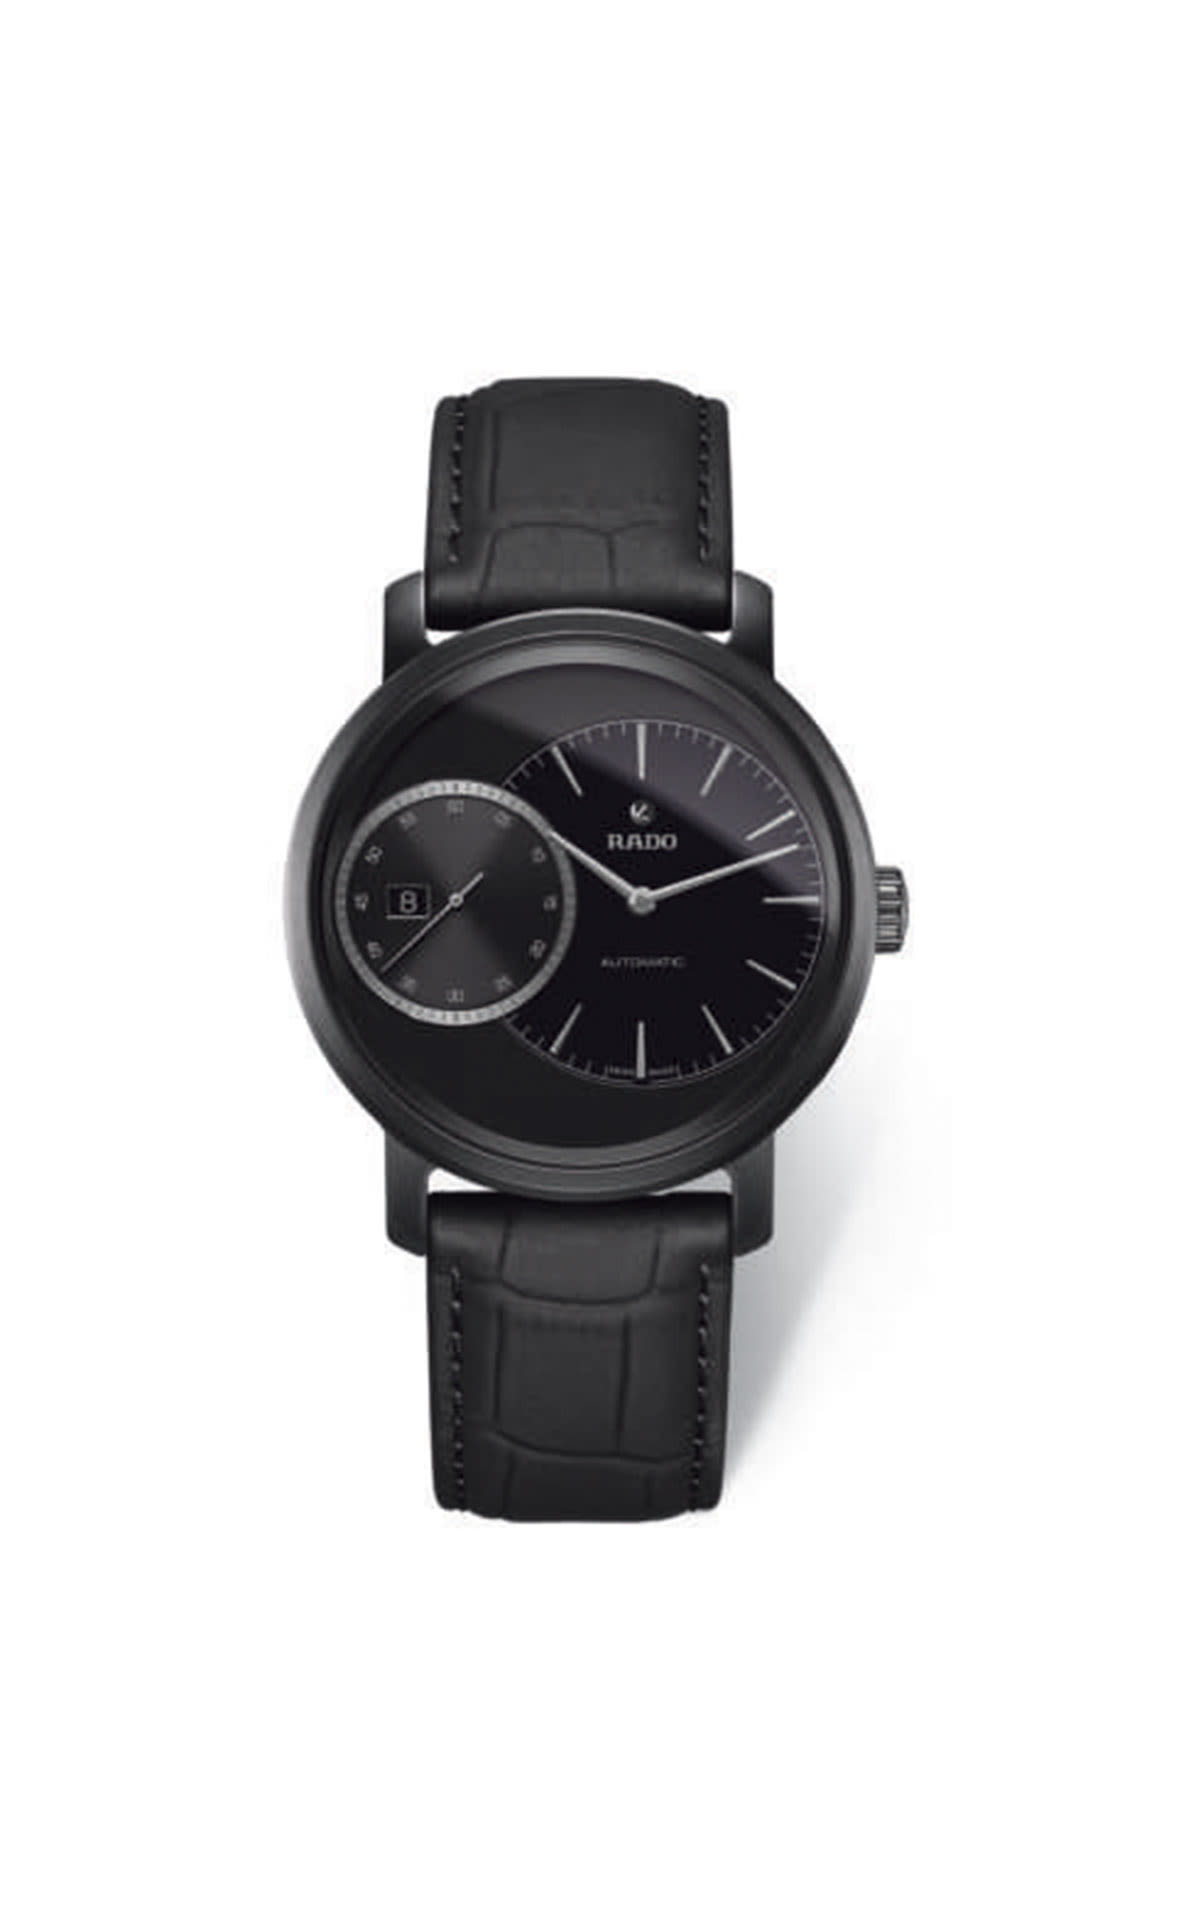 Rado black watch with leather strap